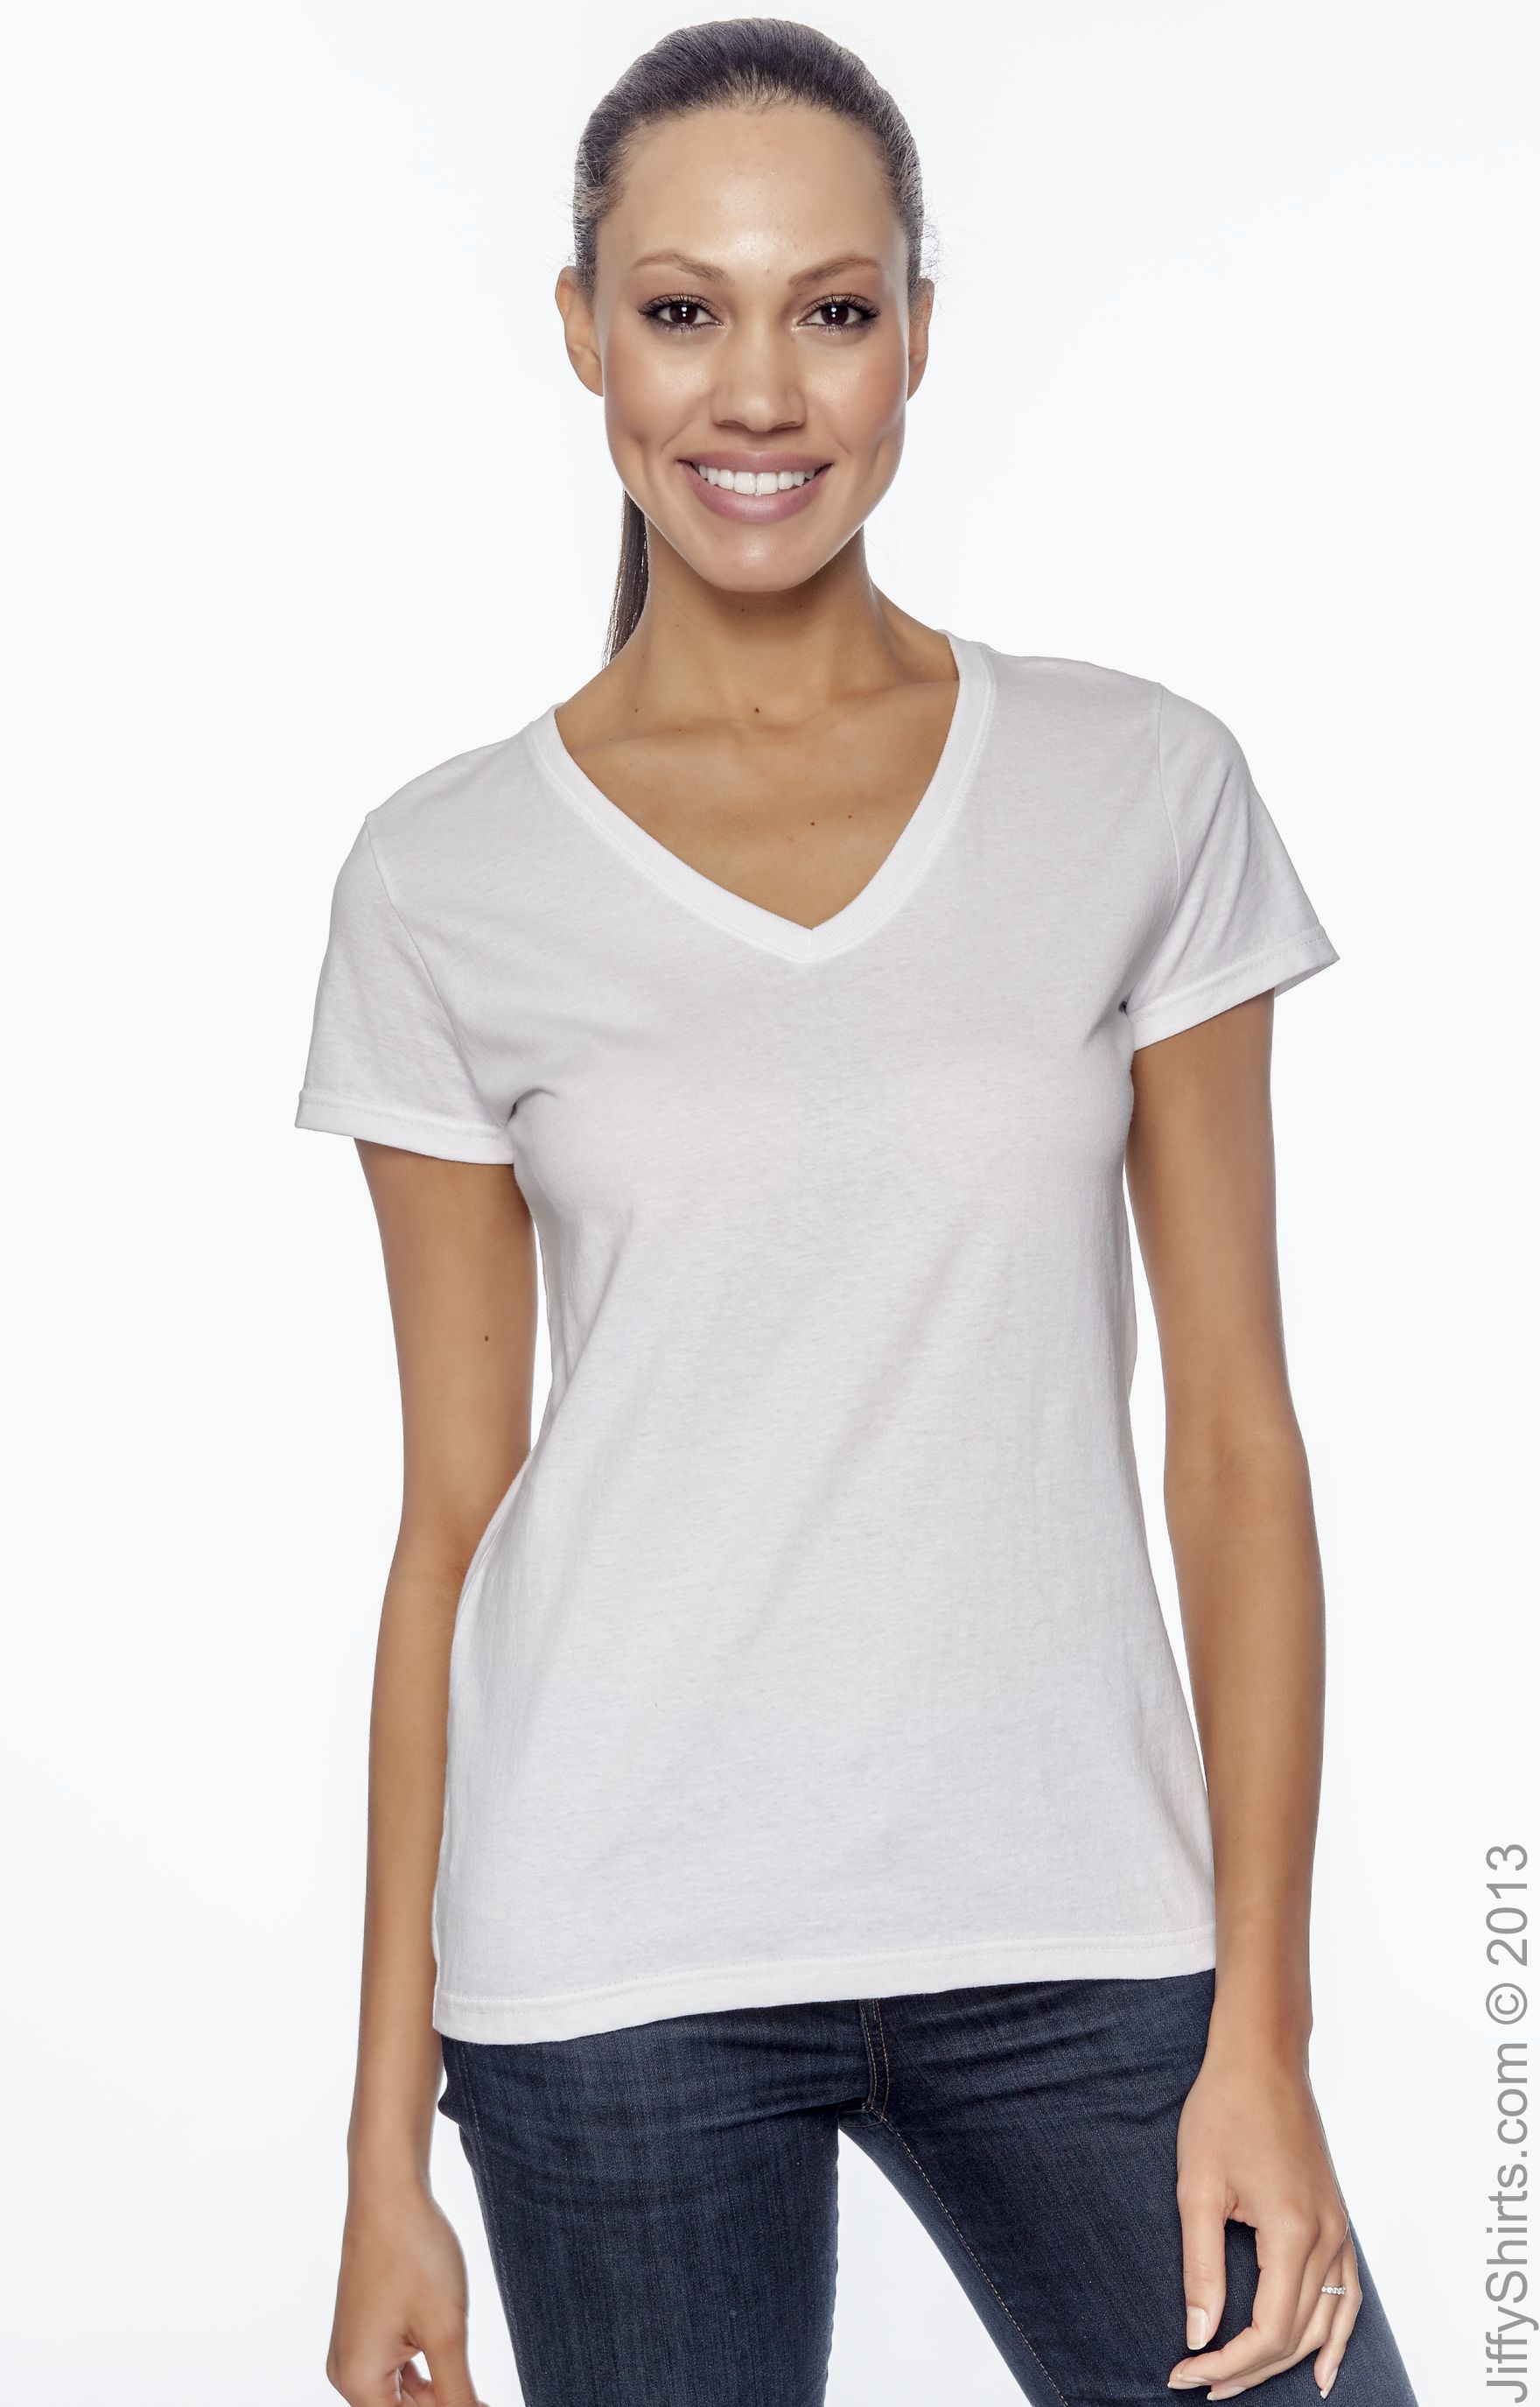 Style # L39VR - Original Label Fruit of the Loom Ladies 5 Oz HD Cotton V-Neck T-Shirt White S -